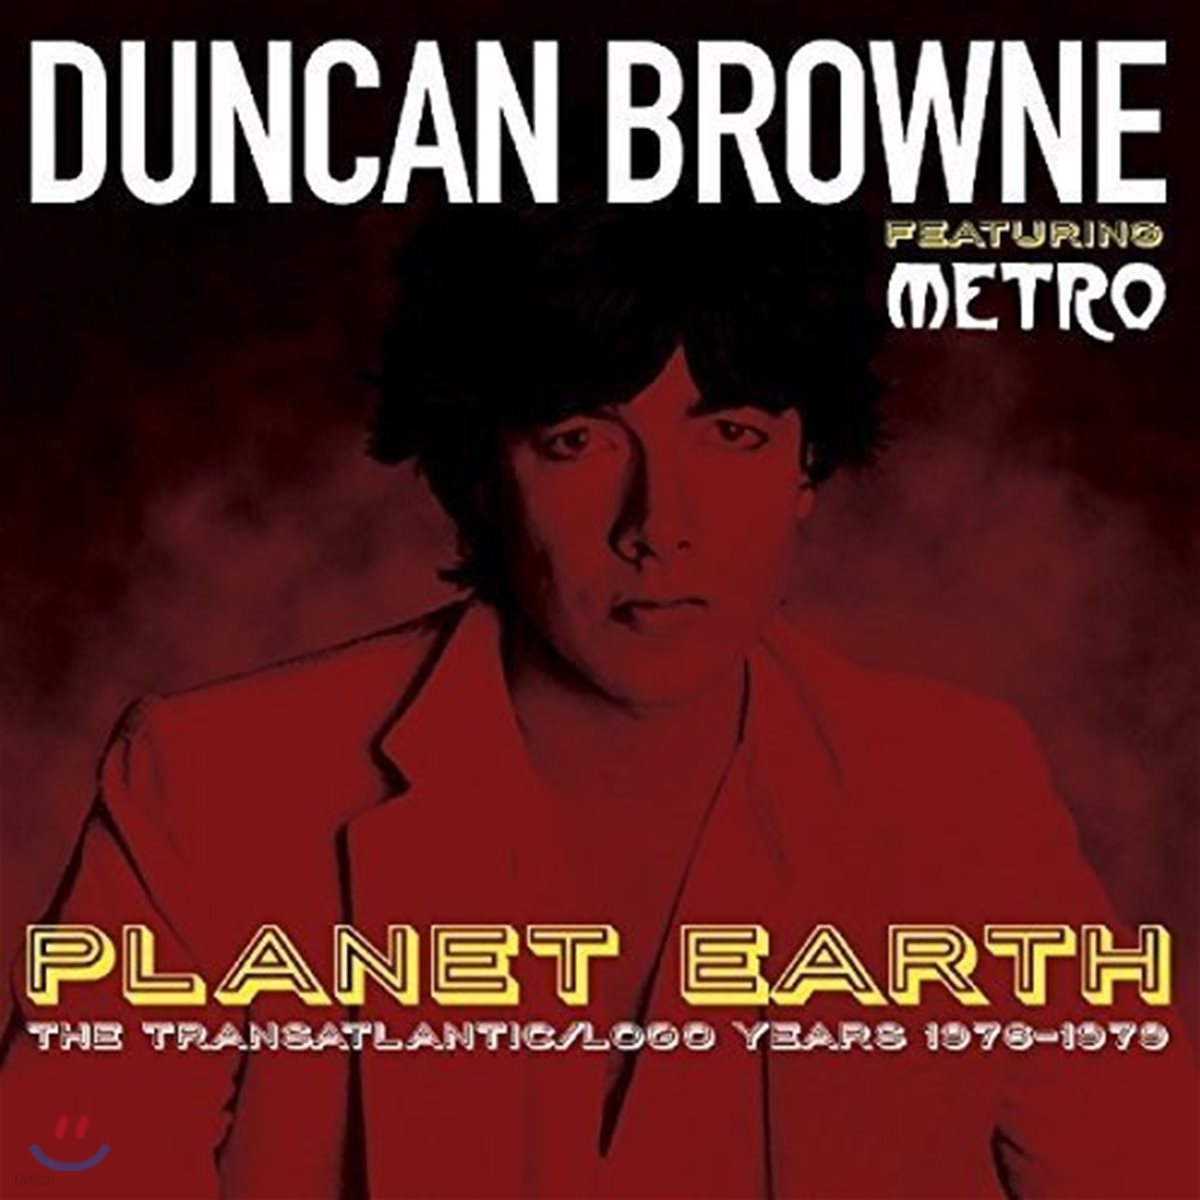 Duncan Browne &amp; Metro (던컨 브라운 &amp; 메트로) - Planet Earth: The Transatlantic / Logo Years 1976-1979